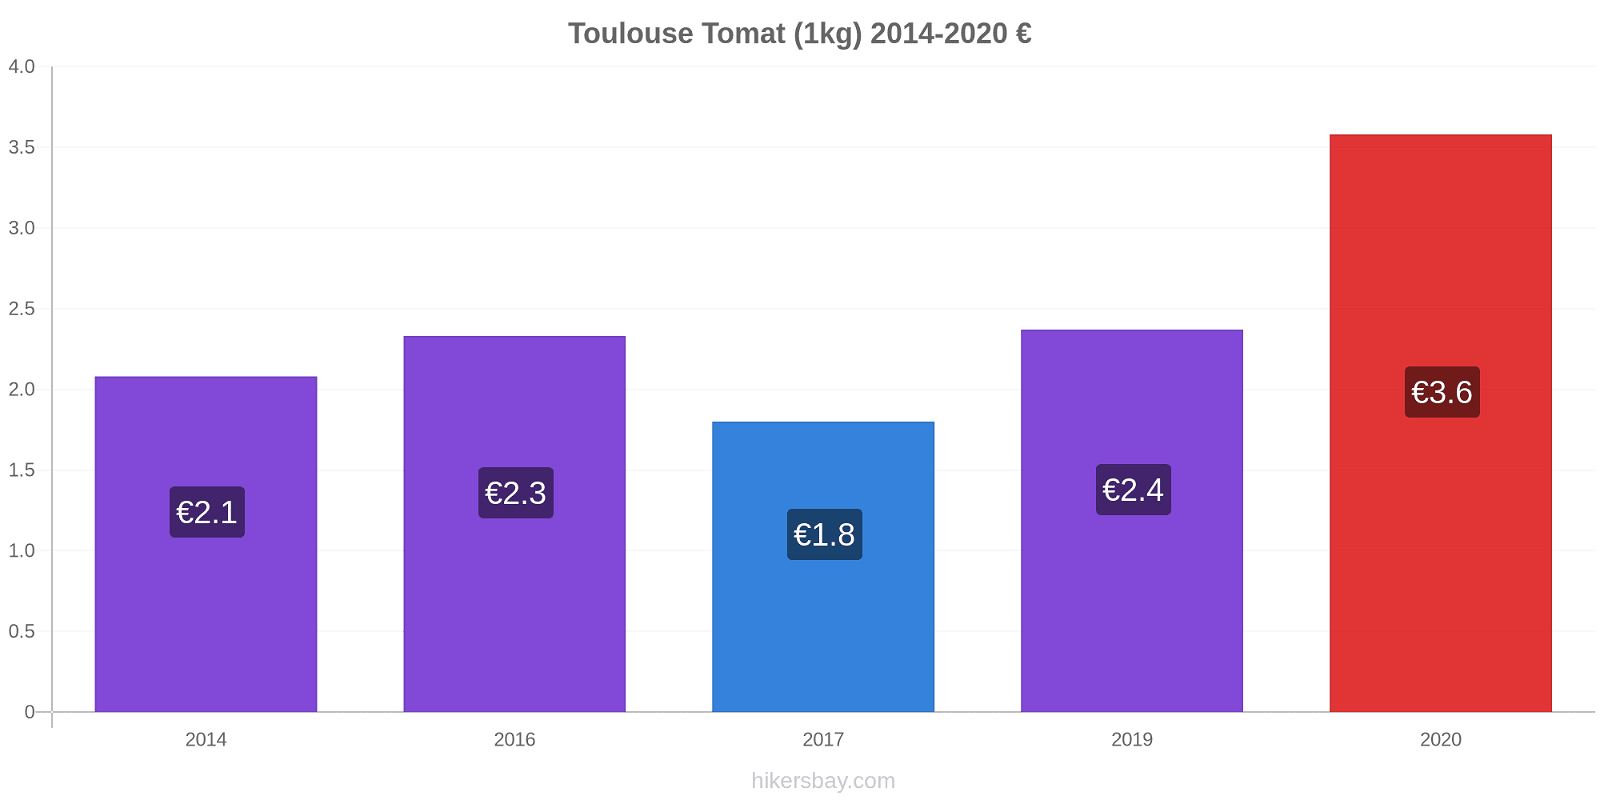 Toulouse prisendringer Tomat (1kg) hikersbay.com